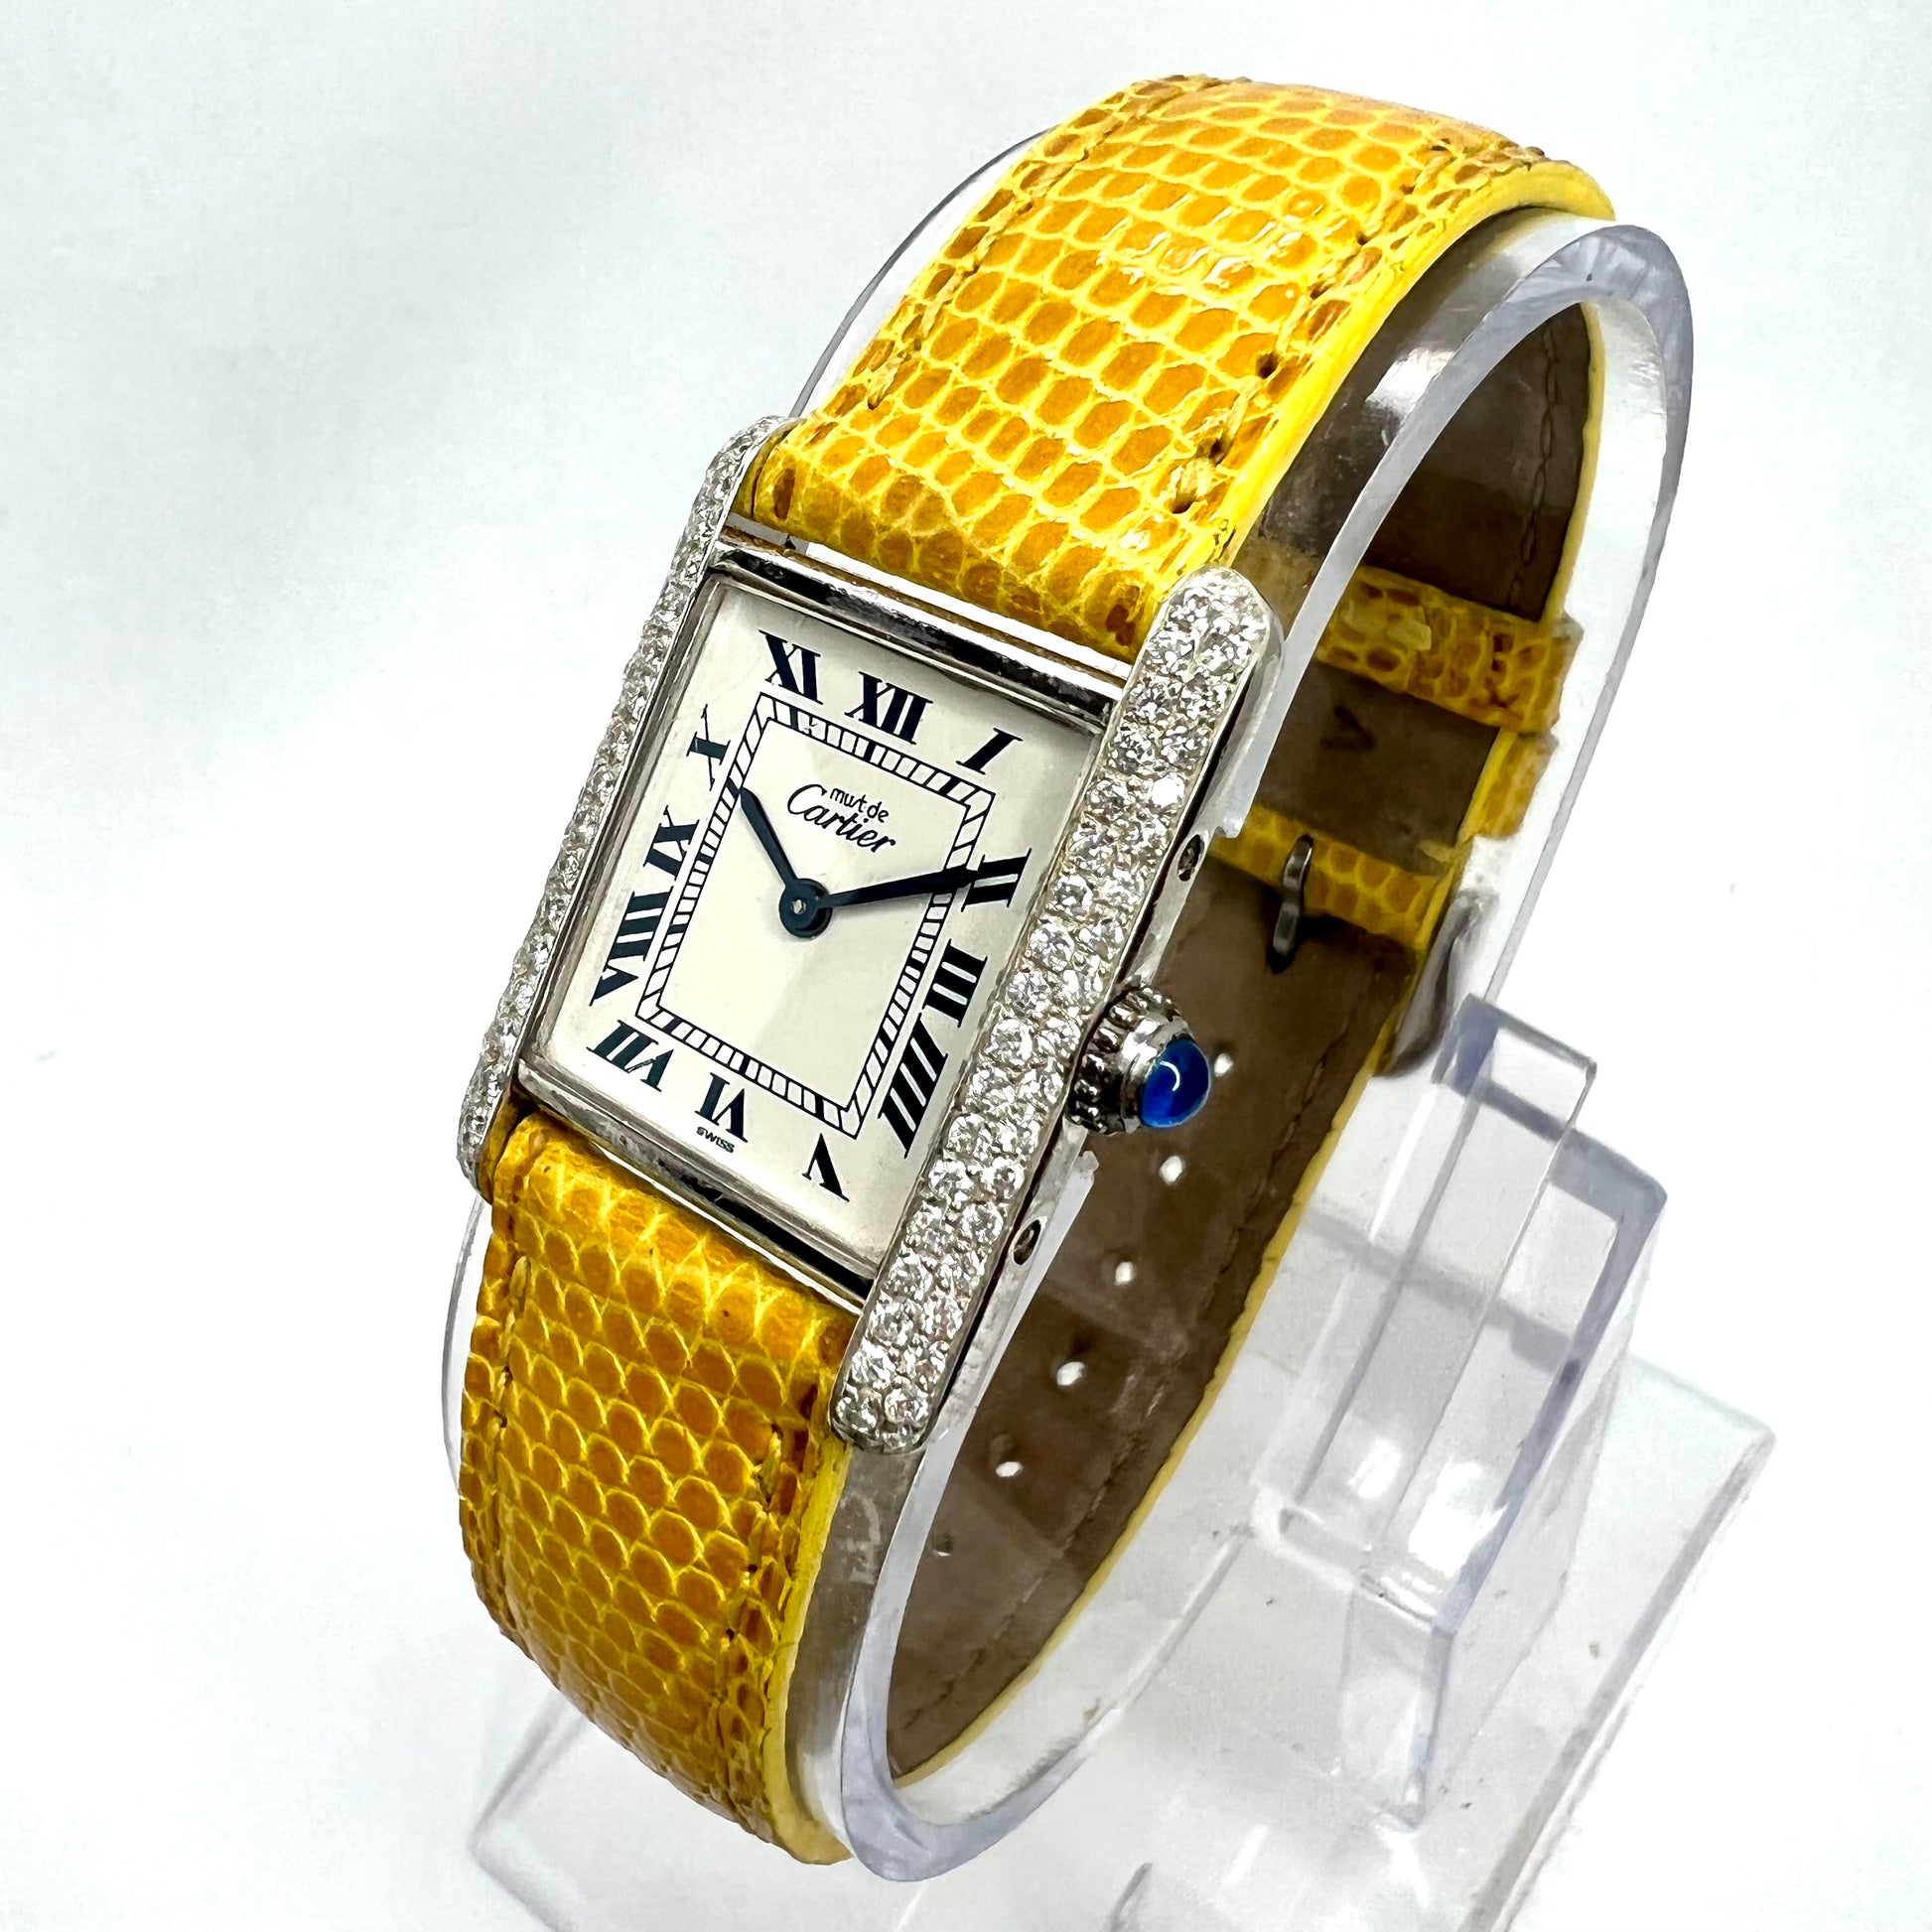 Buy Cartier Tank Must de Cartier Watch, Silvered Dial